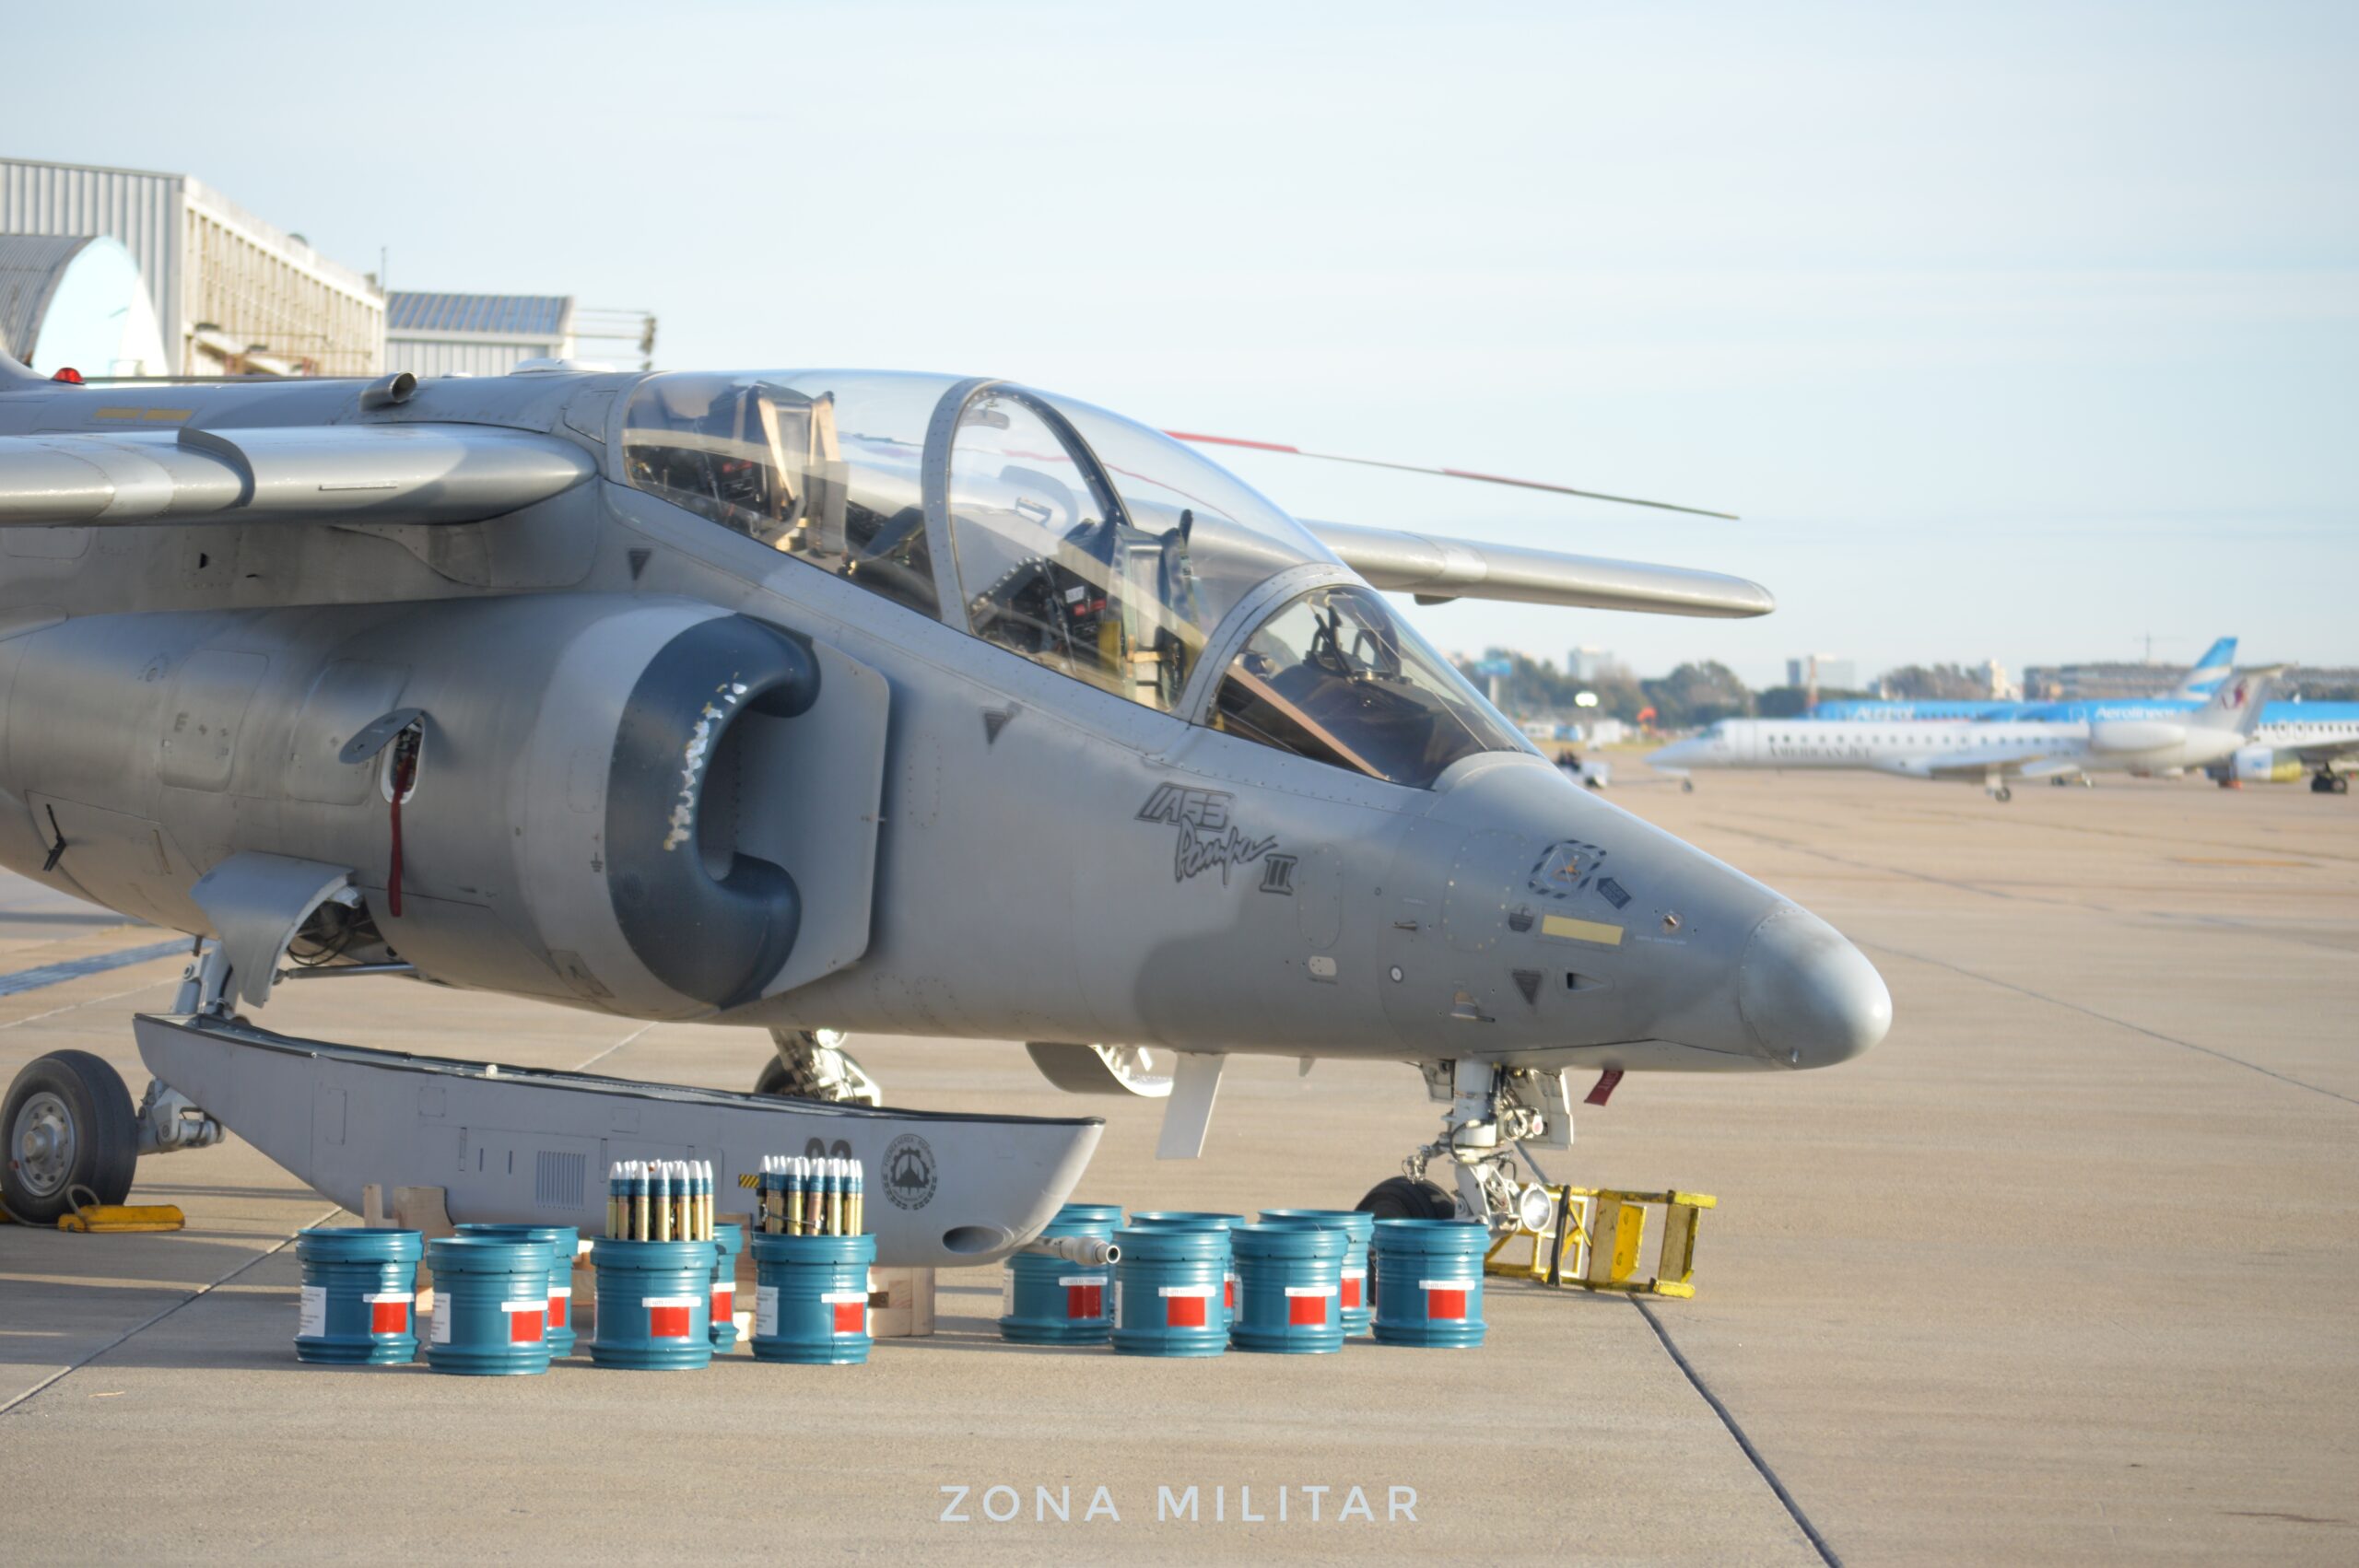 Cobertura – Fabricaciones Militares entrega munición recuperada de 30mm  para IA-63 Pampa de la Fuerza Aérea Argentina